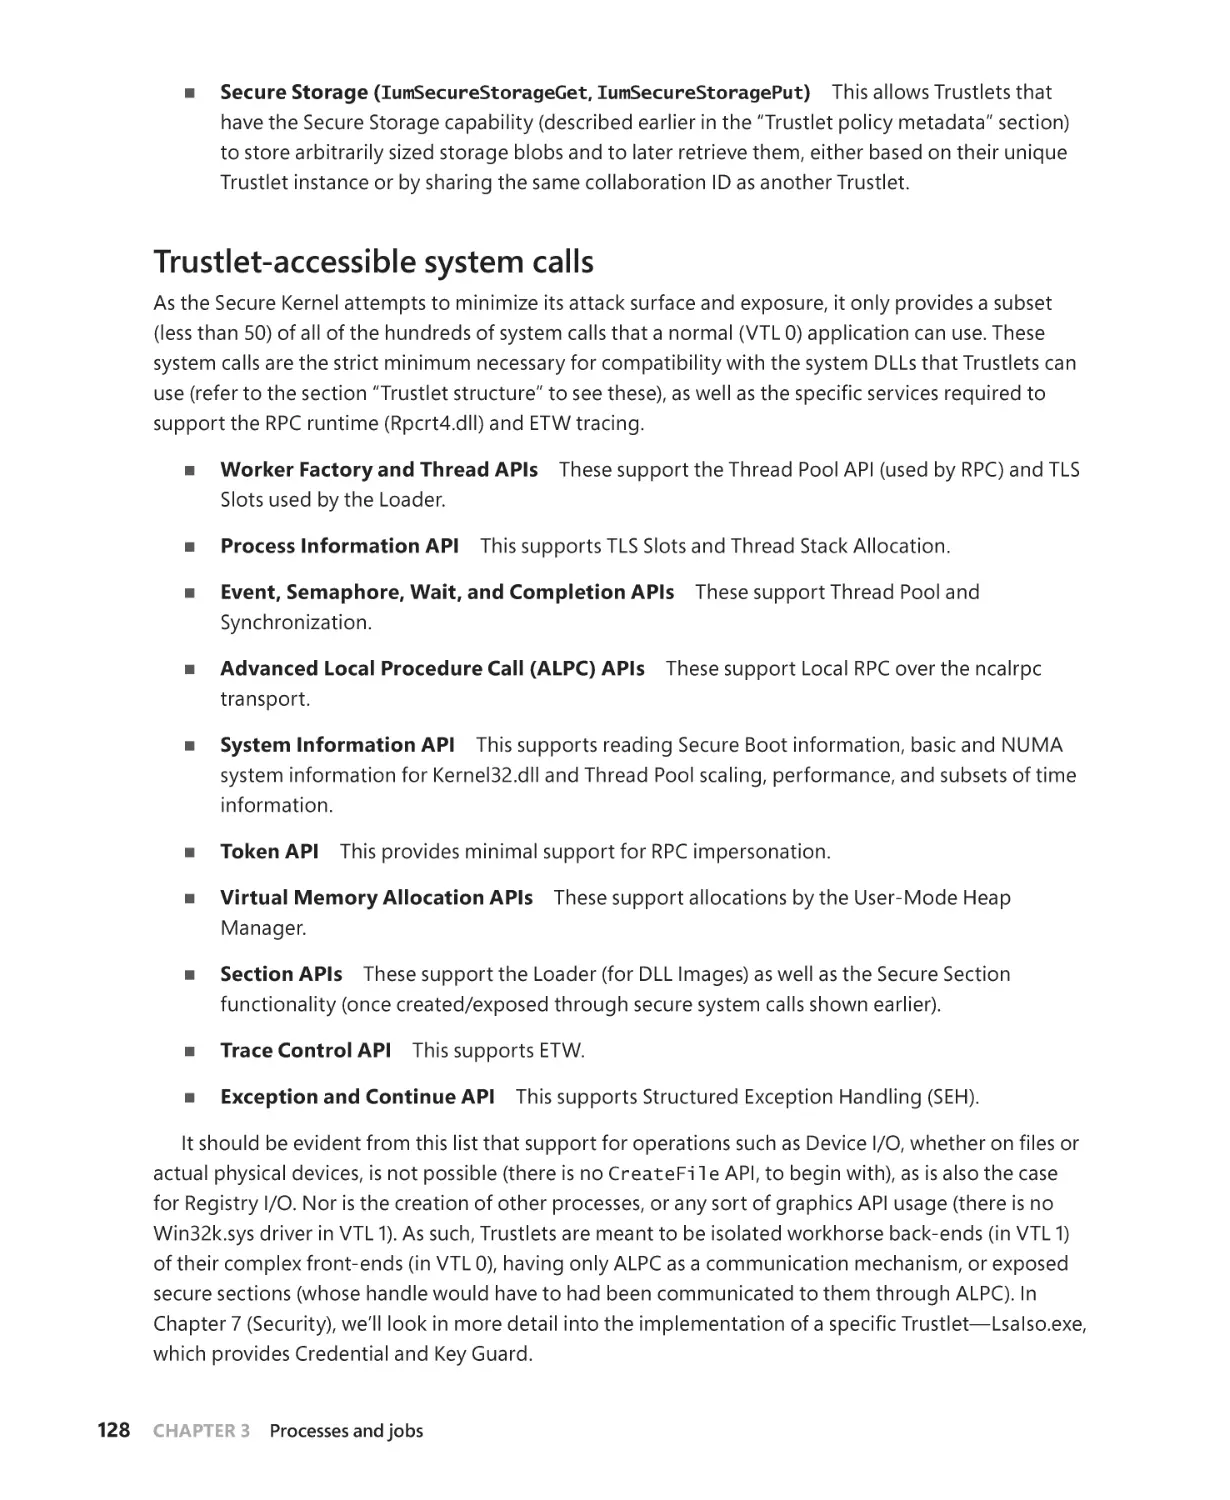 Trustlet-accessible system calls